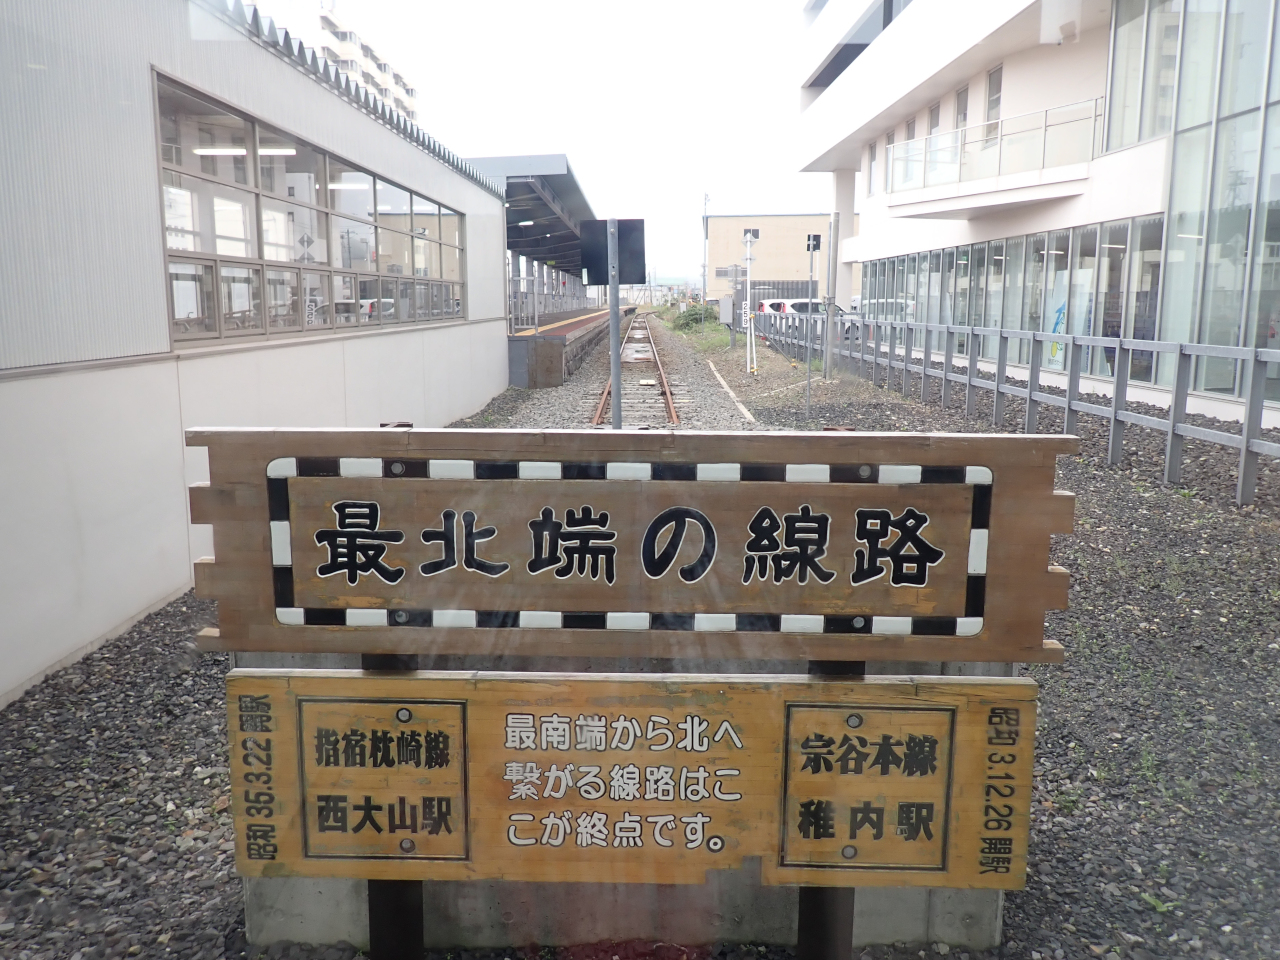 爆発的な割引 北海道 駅看板 北海道発 | www.happychild.co